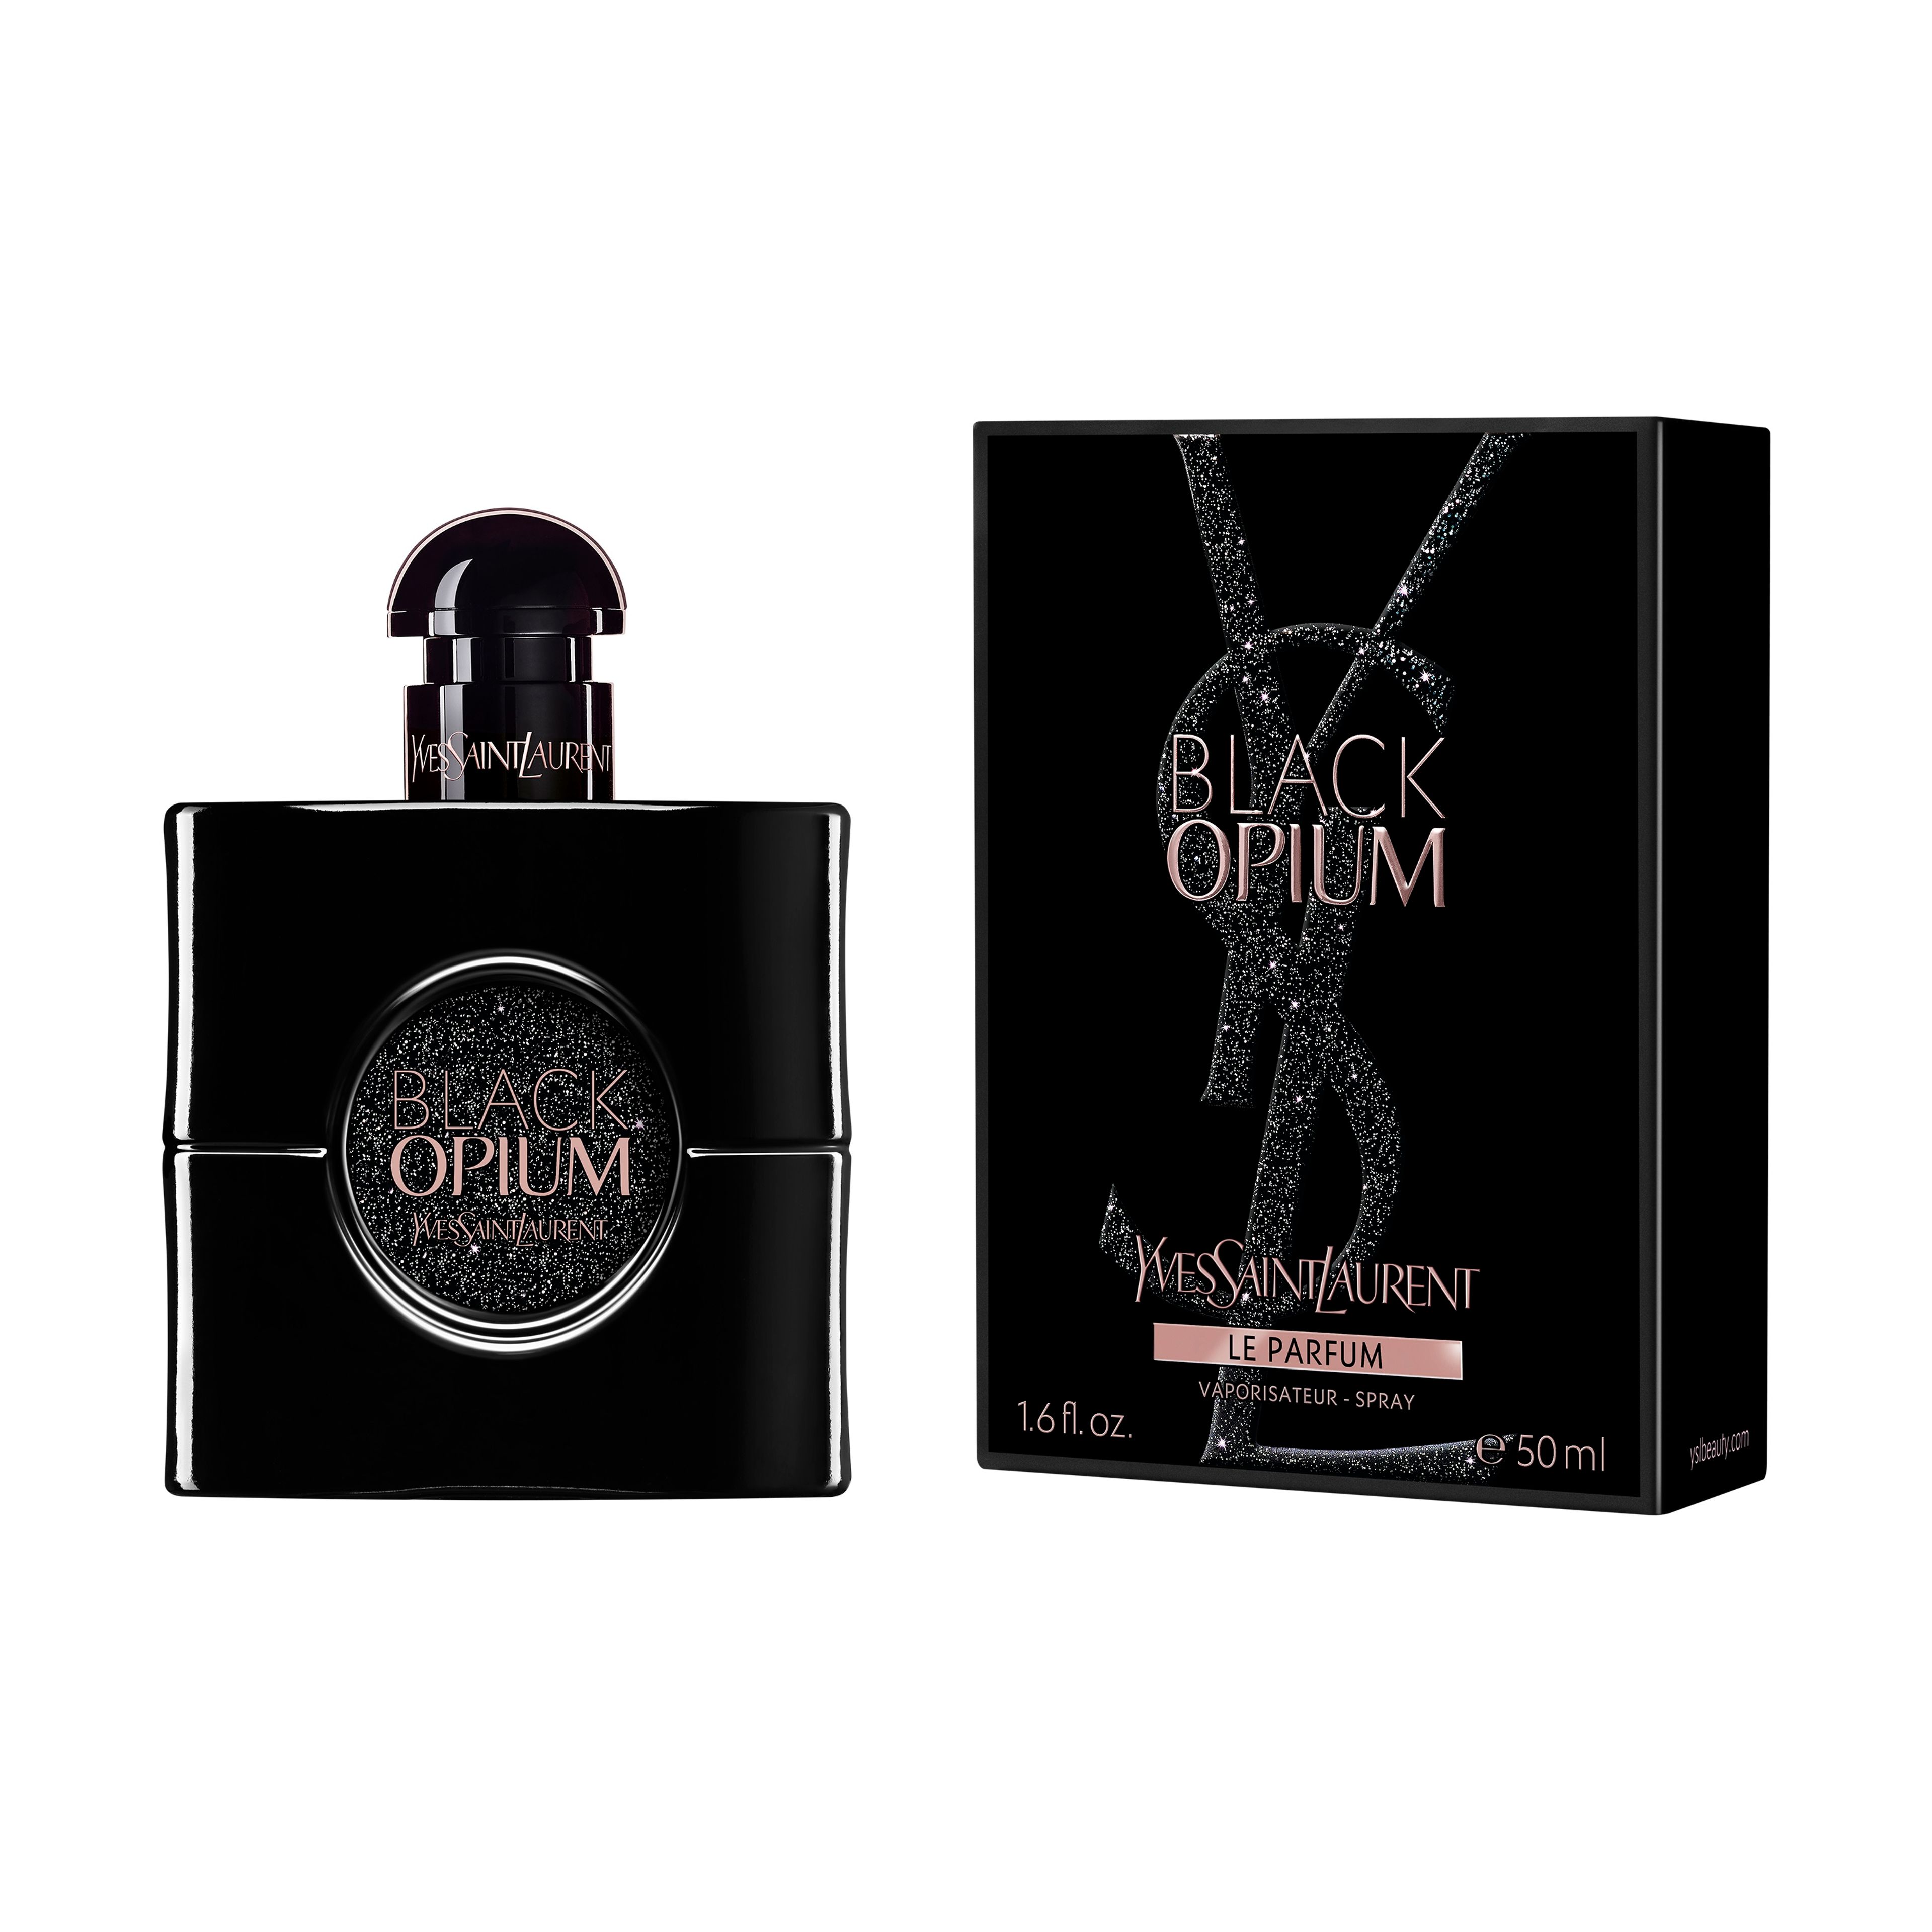 Yves Saint Laurent Ysl Black Opium Le Parfum 2